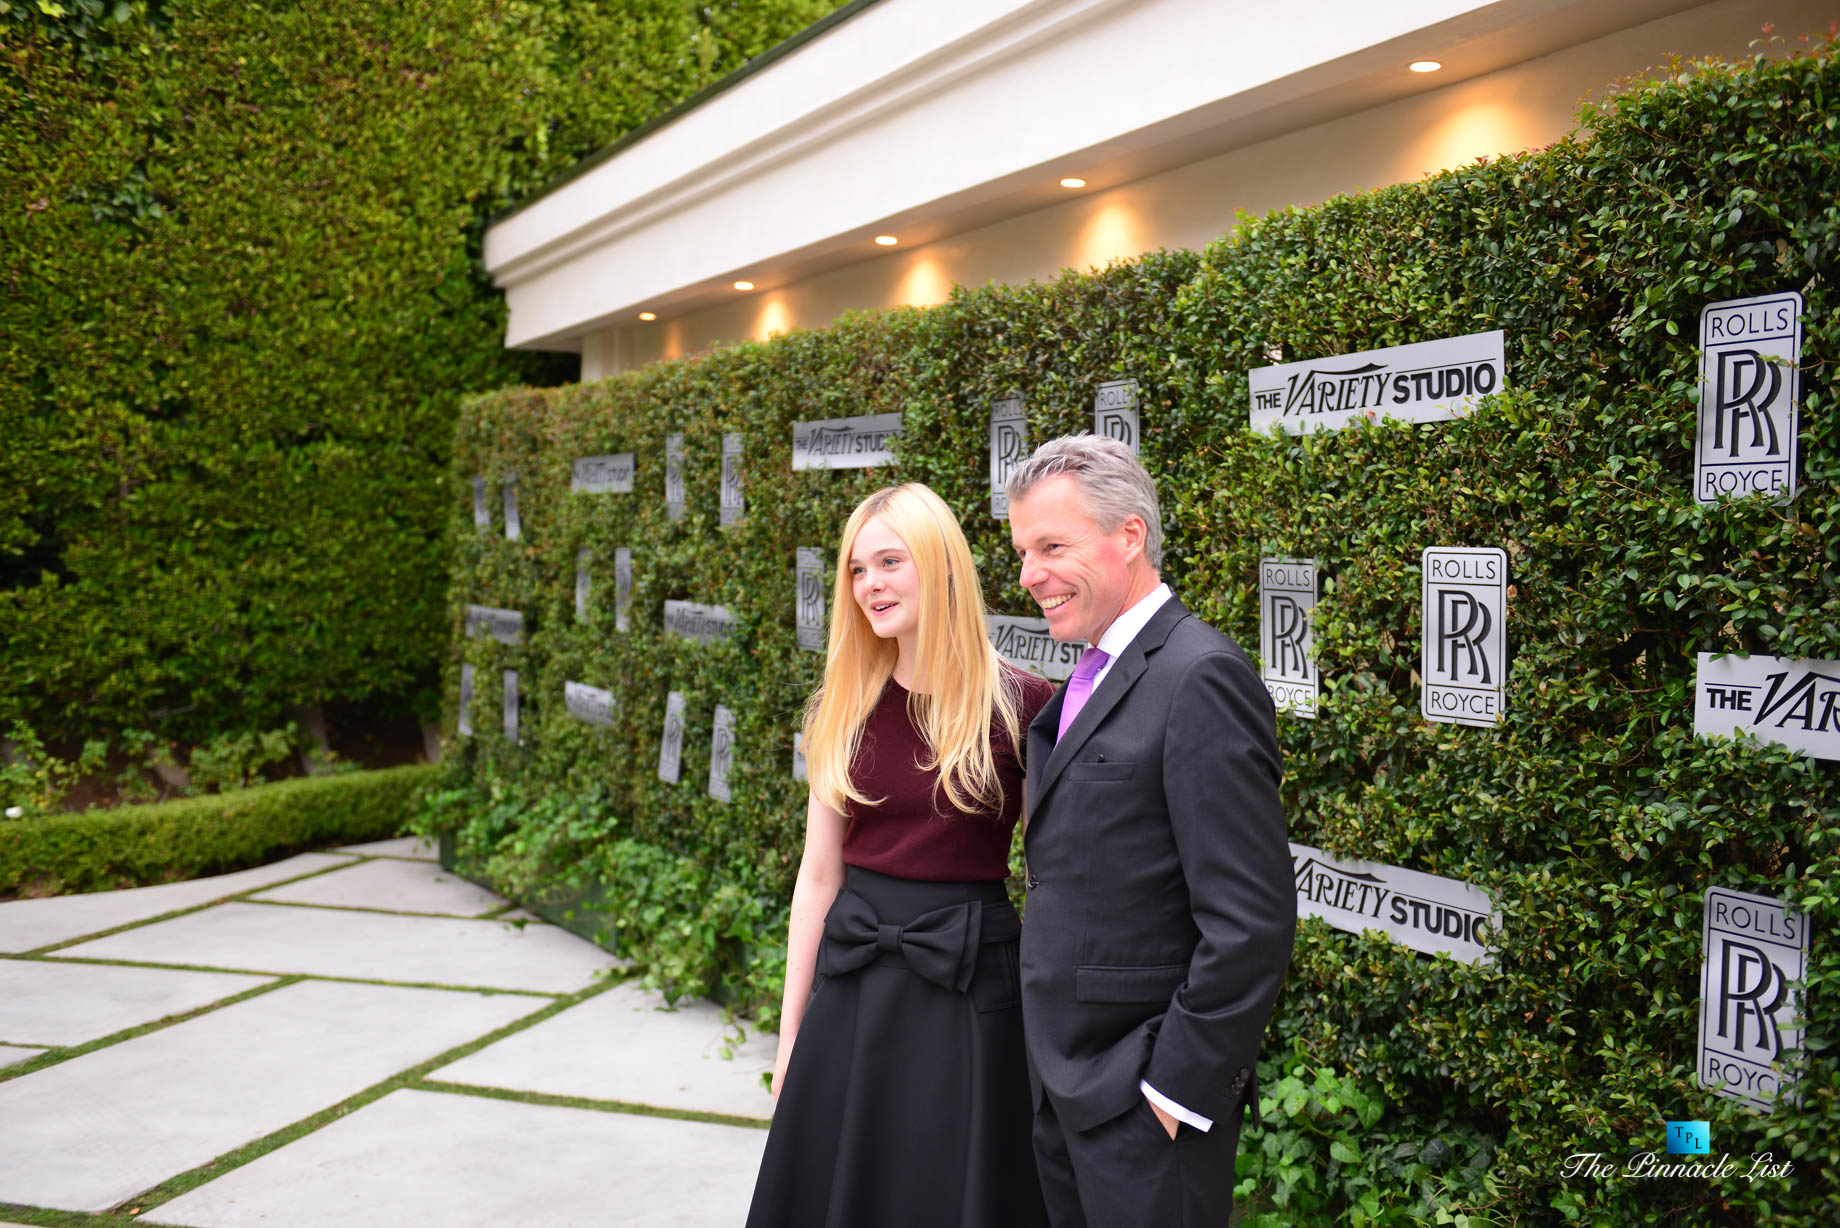 Elle Fanning – Torsten Muller-Oetvoes – Rolls-Royce Hosts The Variety Studio Event in Beverly Hills, California